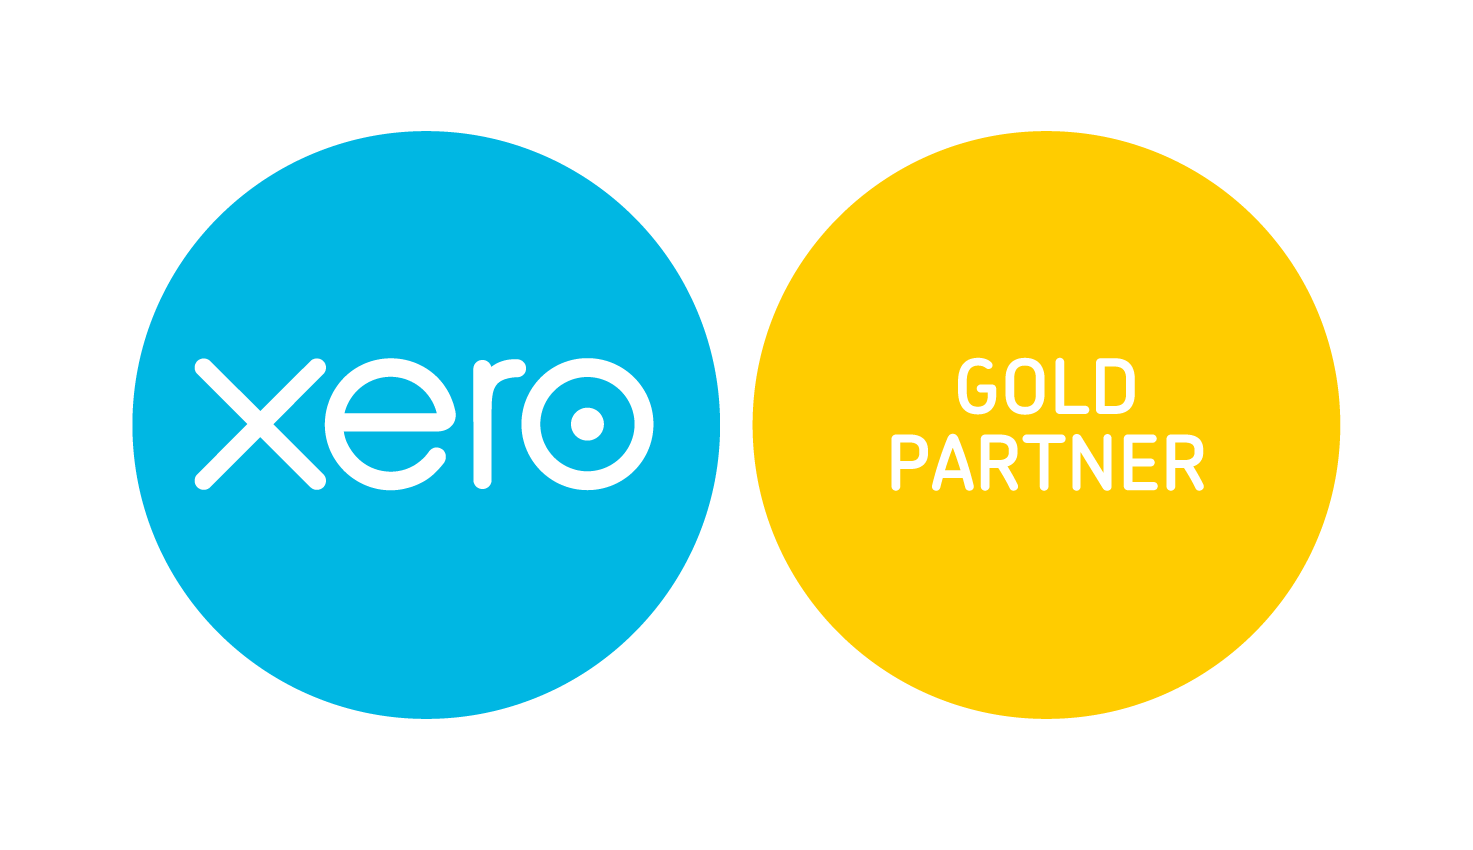 xero-gold-partner-logo-hires-RGB.png